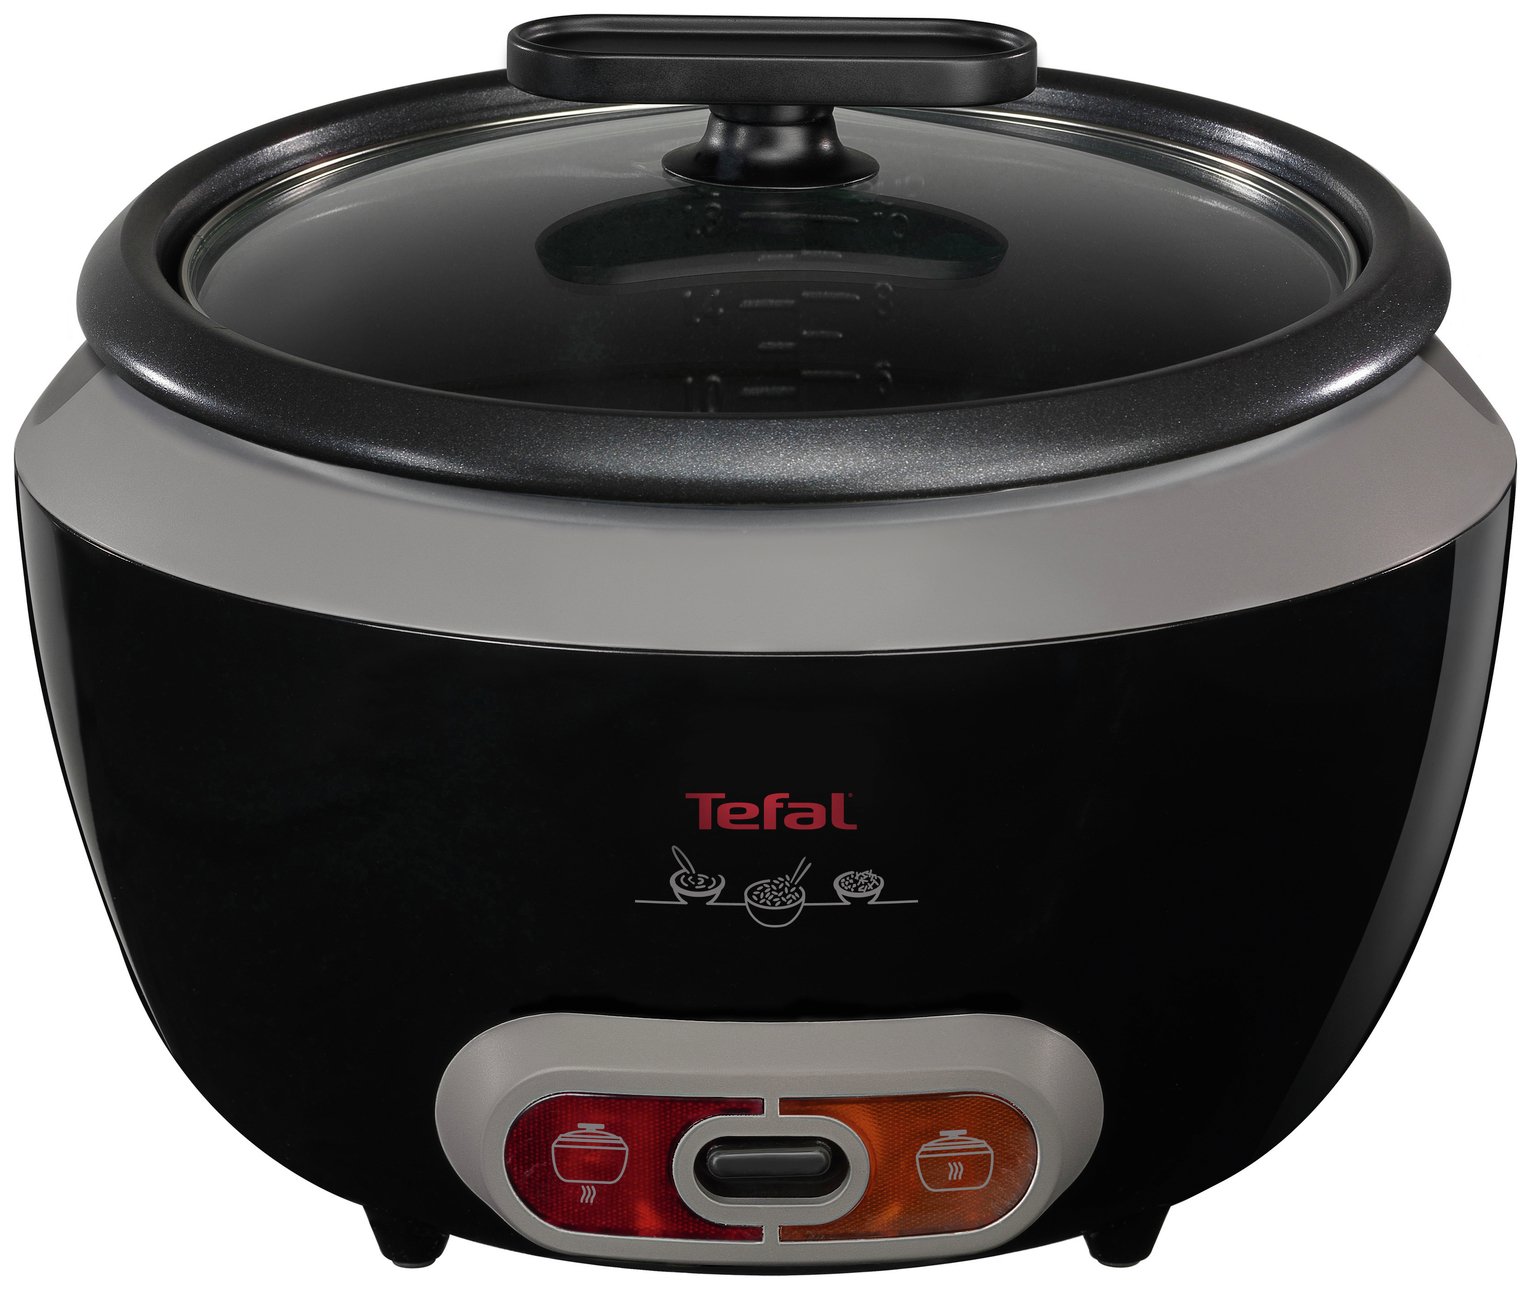 Tefal RK1568UK 1.8L Rice Cooker review